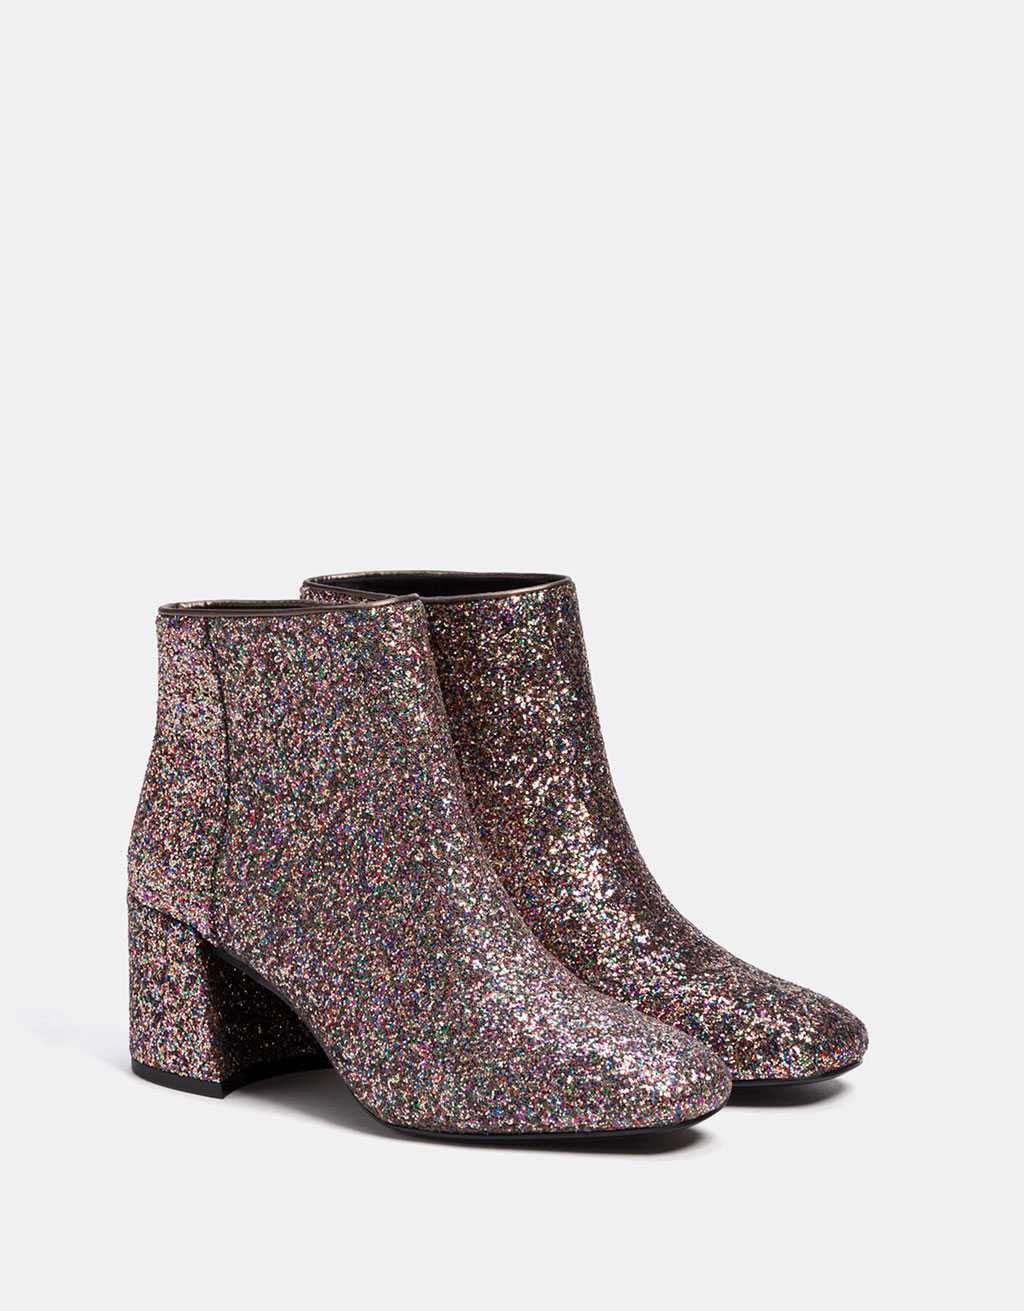 glitter boots